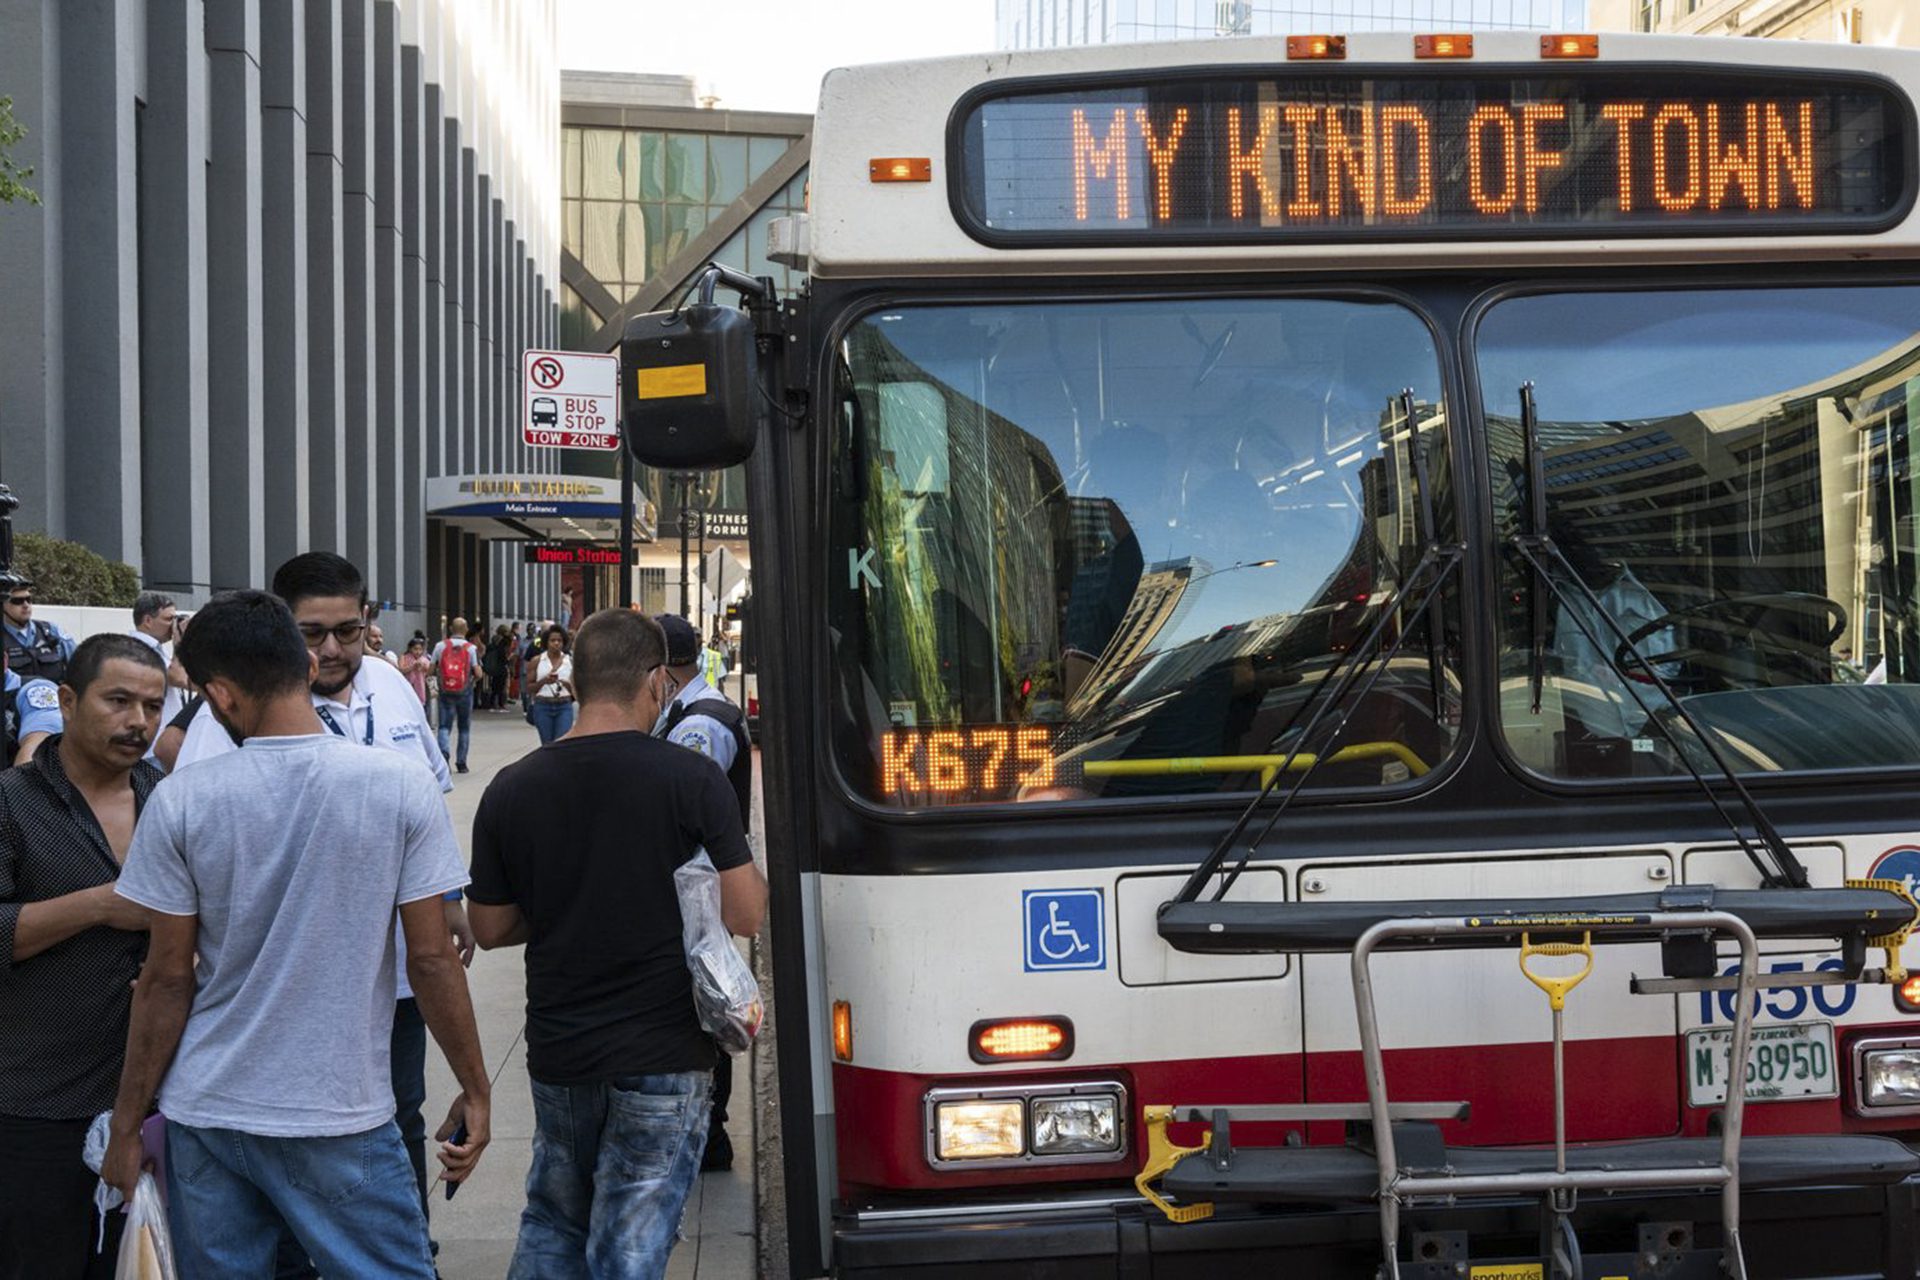 emigrantes junto a un autobús de Chicago que dice &quot;mi tipo de ciudad&quot;